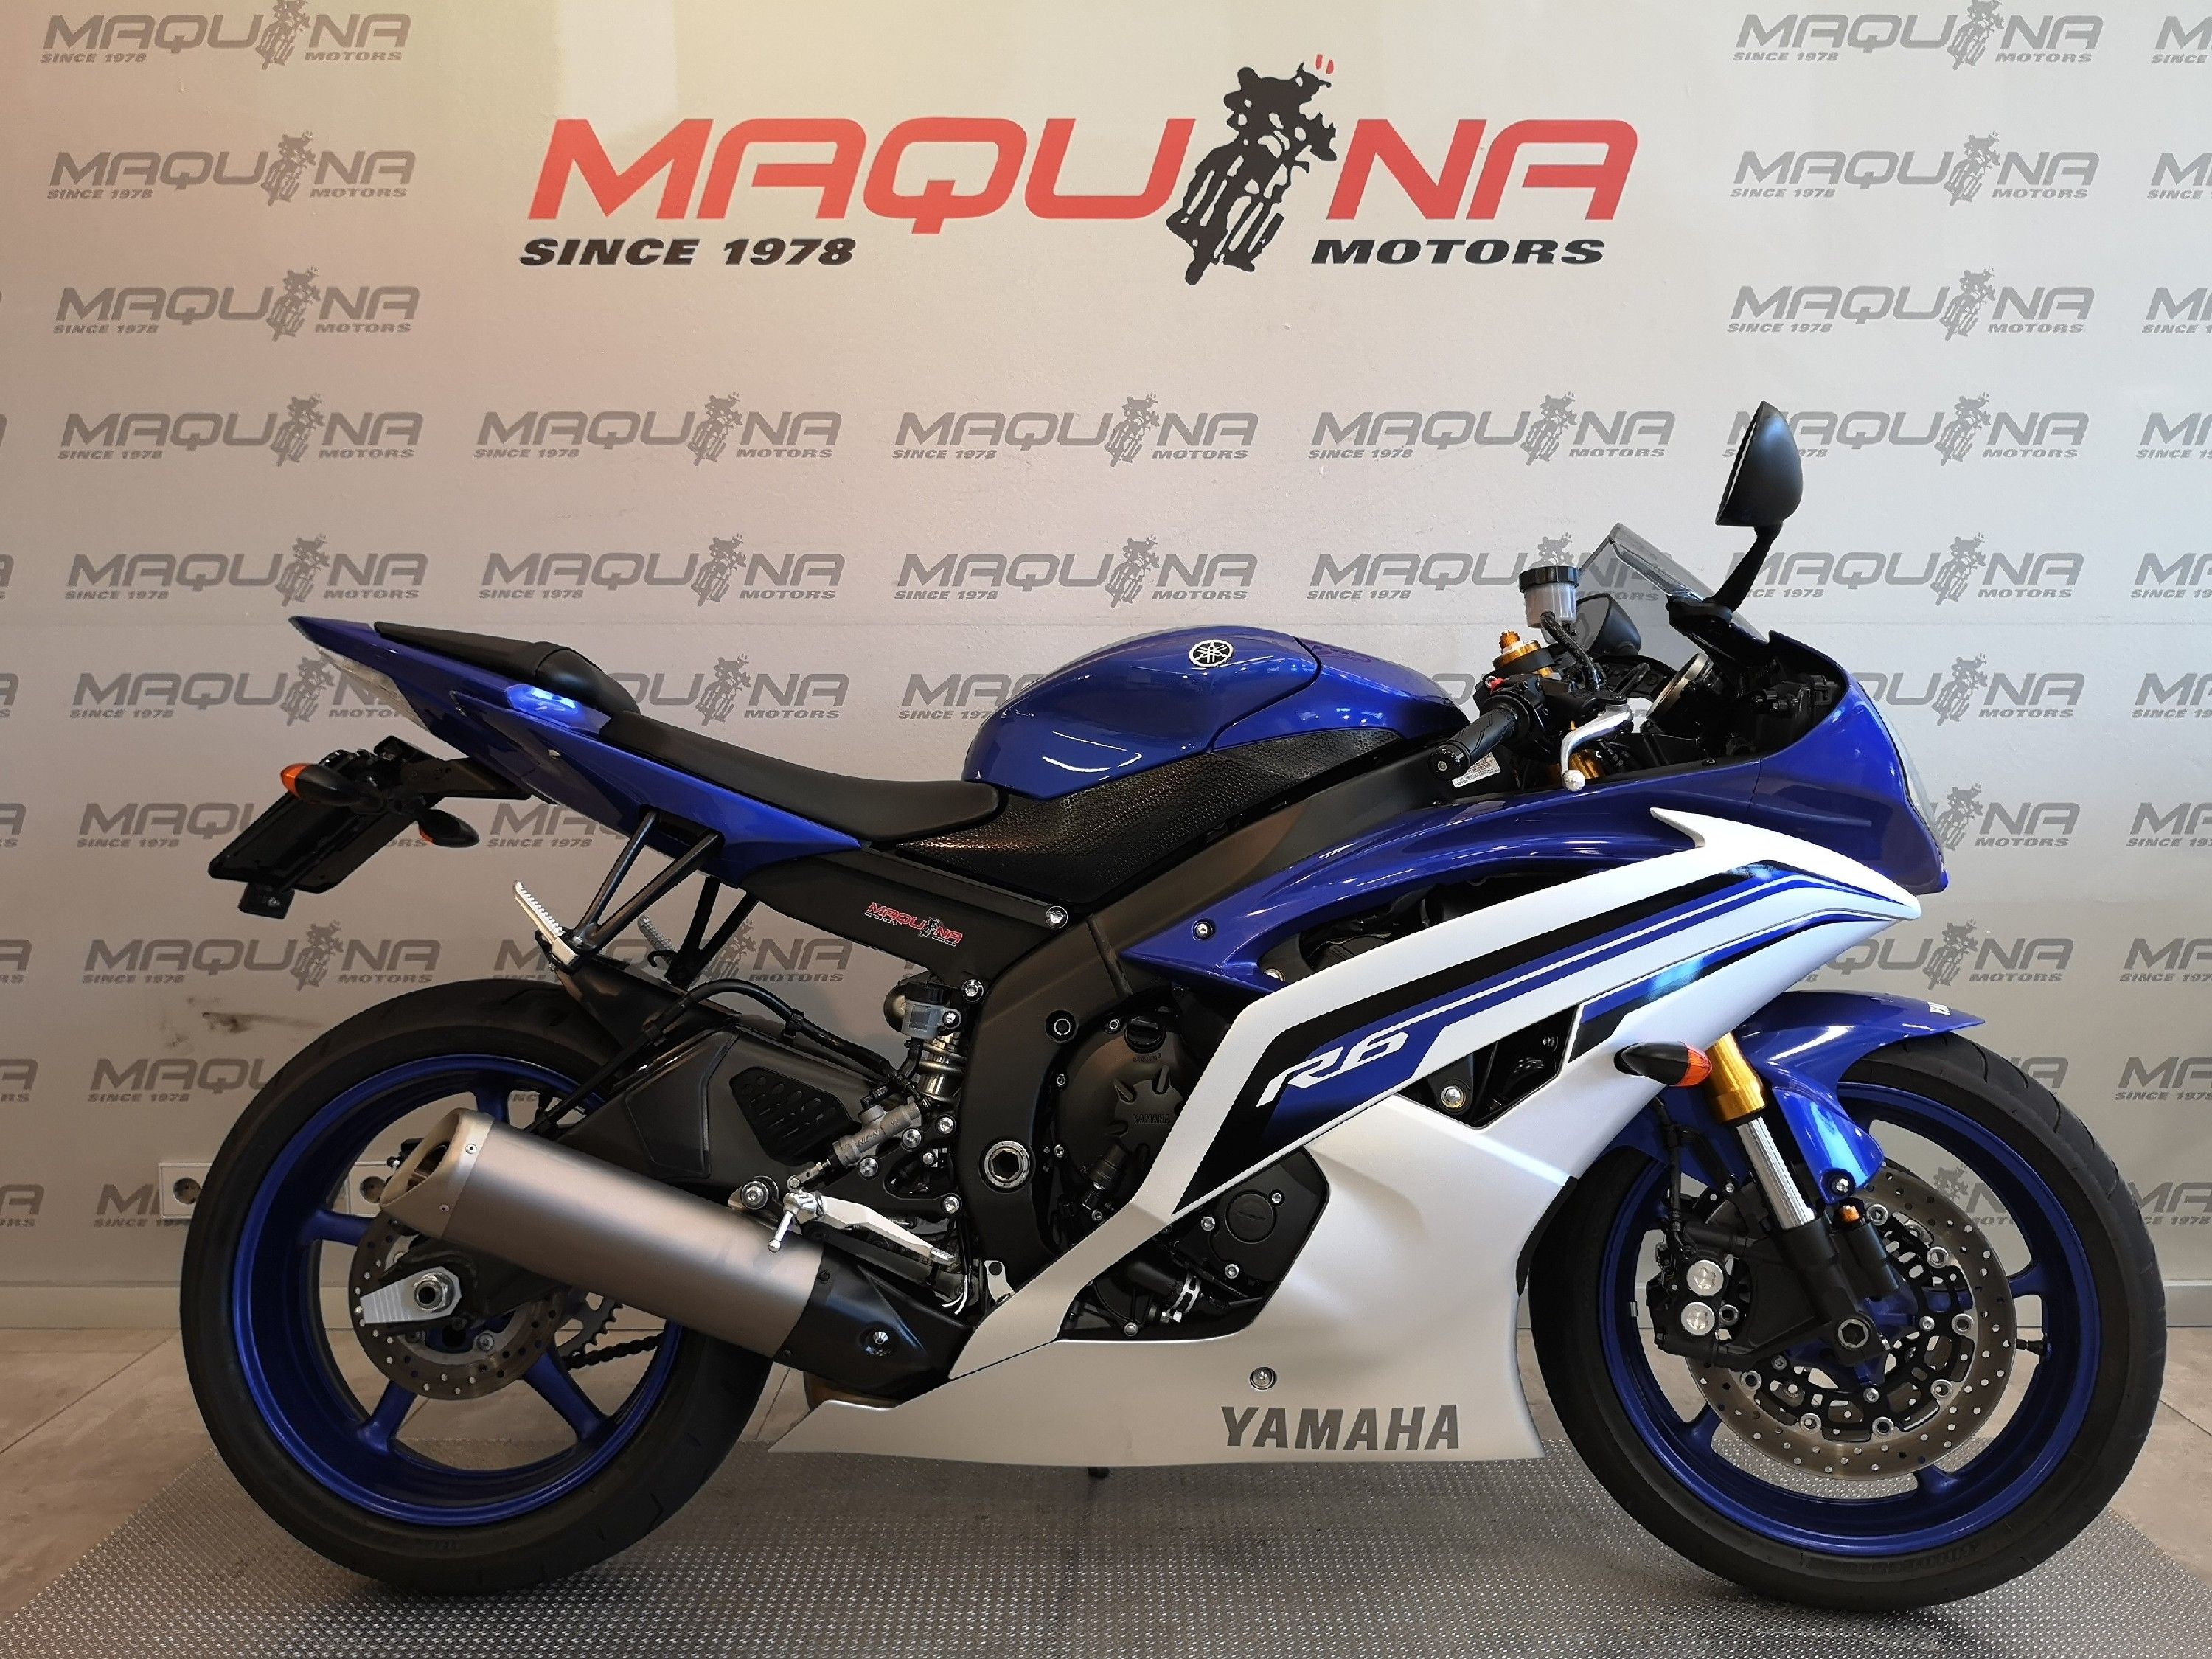 YAMAHA YZF 600 R6 06 – Maquina Motors motos ocasión